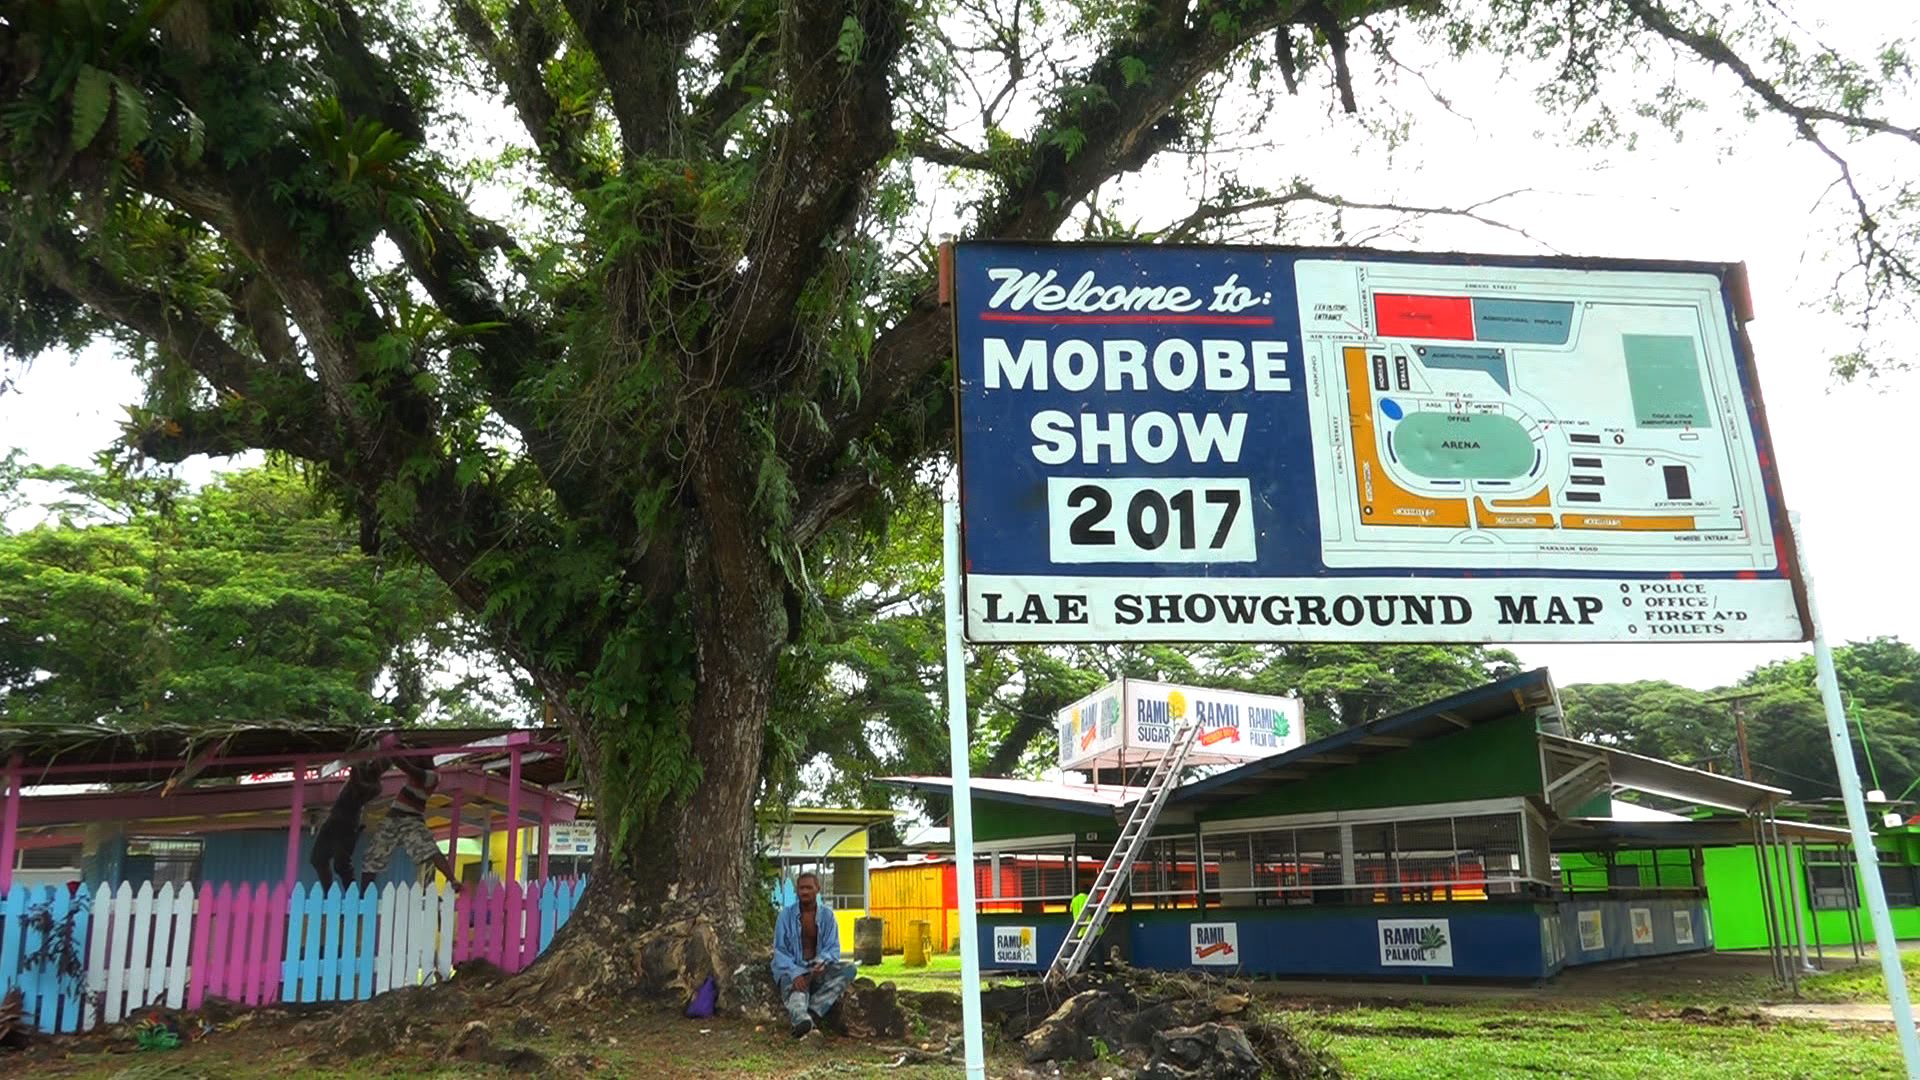 Morobe Show 2017 Preview - EMTV Online1920 x 1080